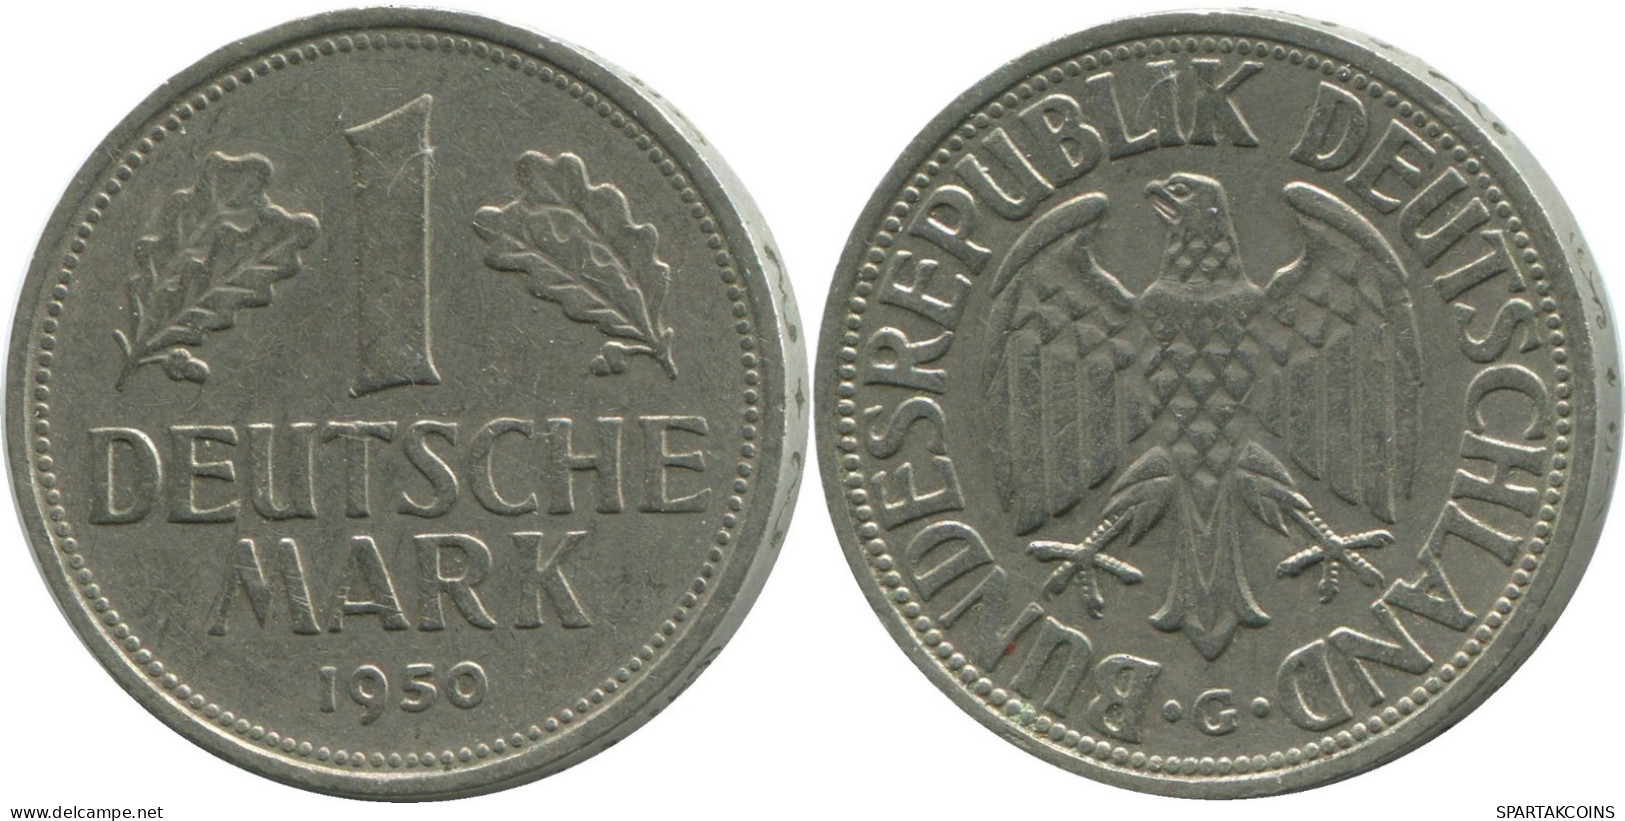 1 MARK 1950 G WEST & UNIFIED GERMANY Coin #DE10399.5.U.A - 1 Mark